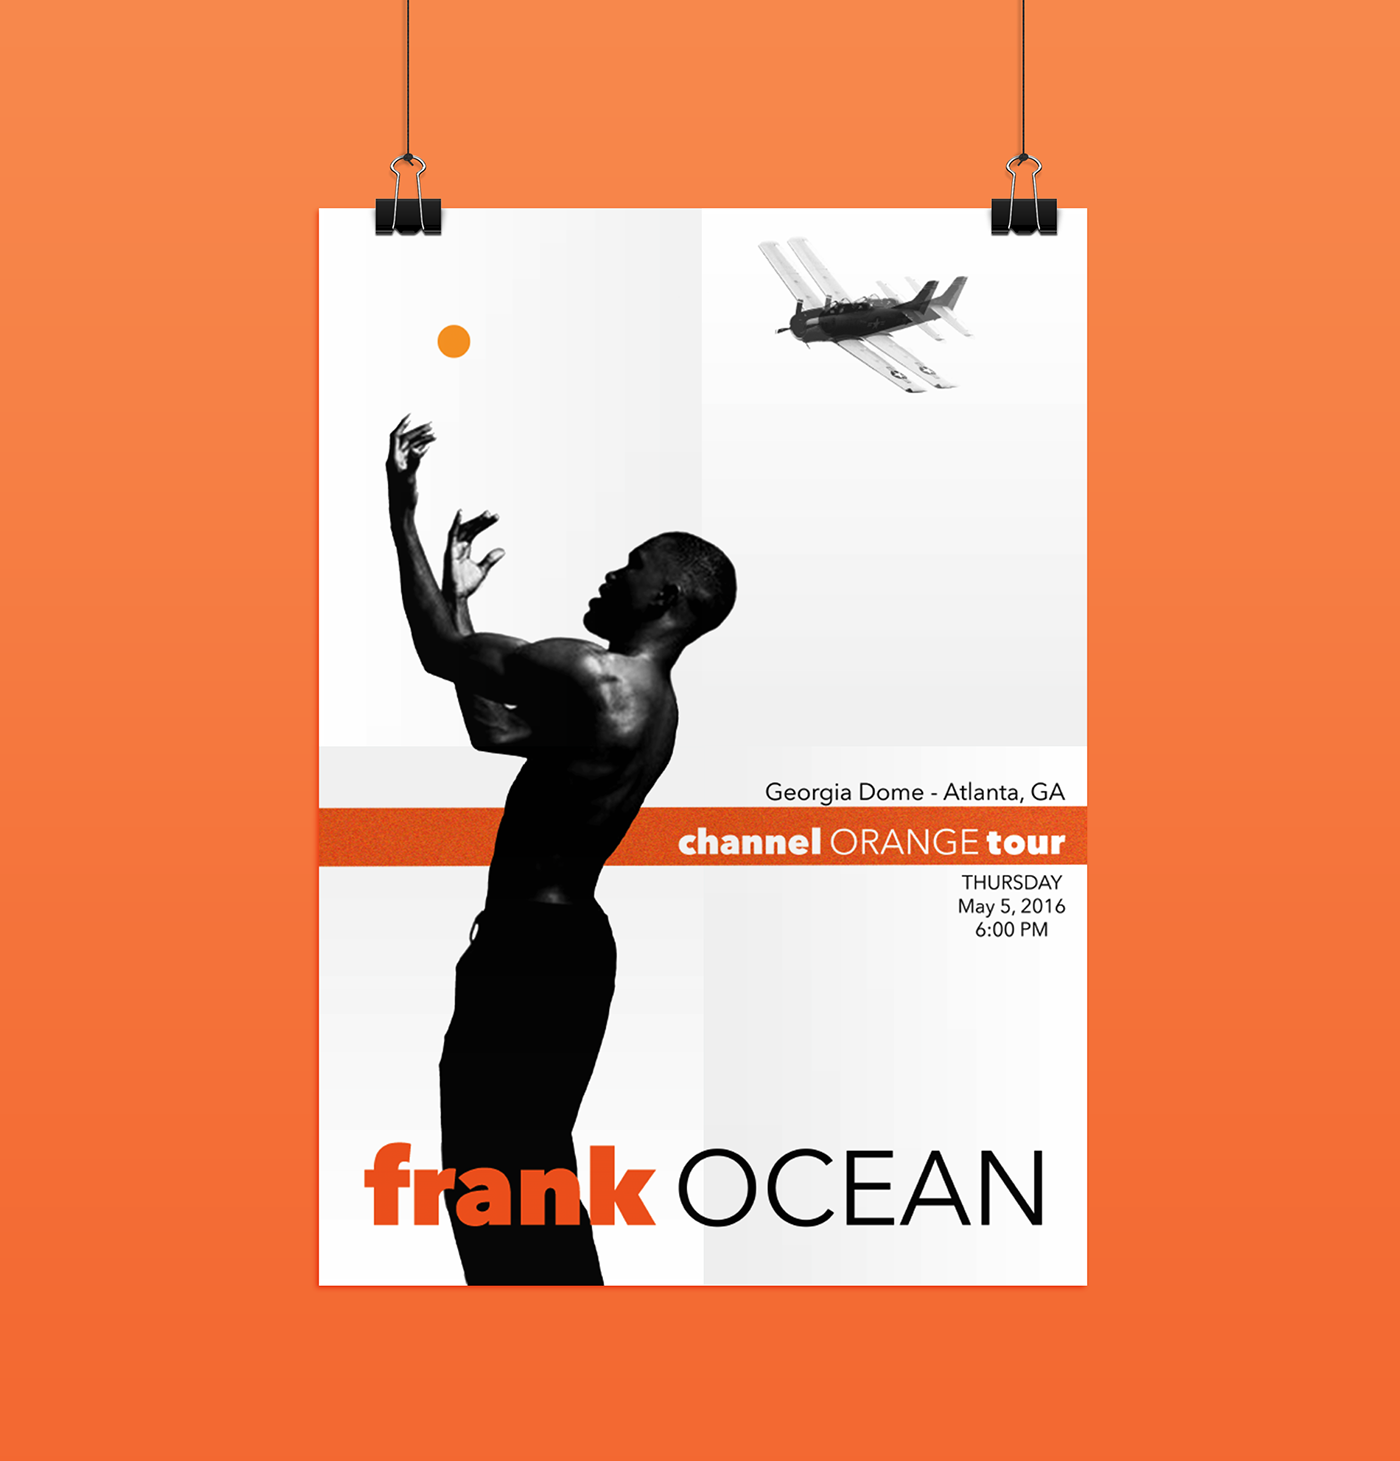 Frank Ocean Concert Posters on Behance